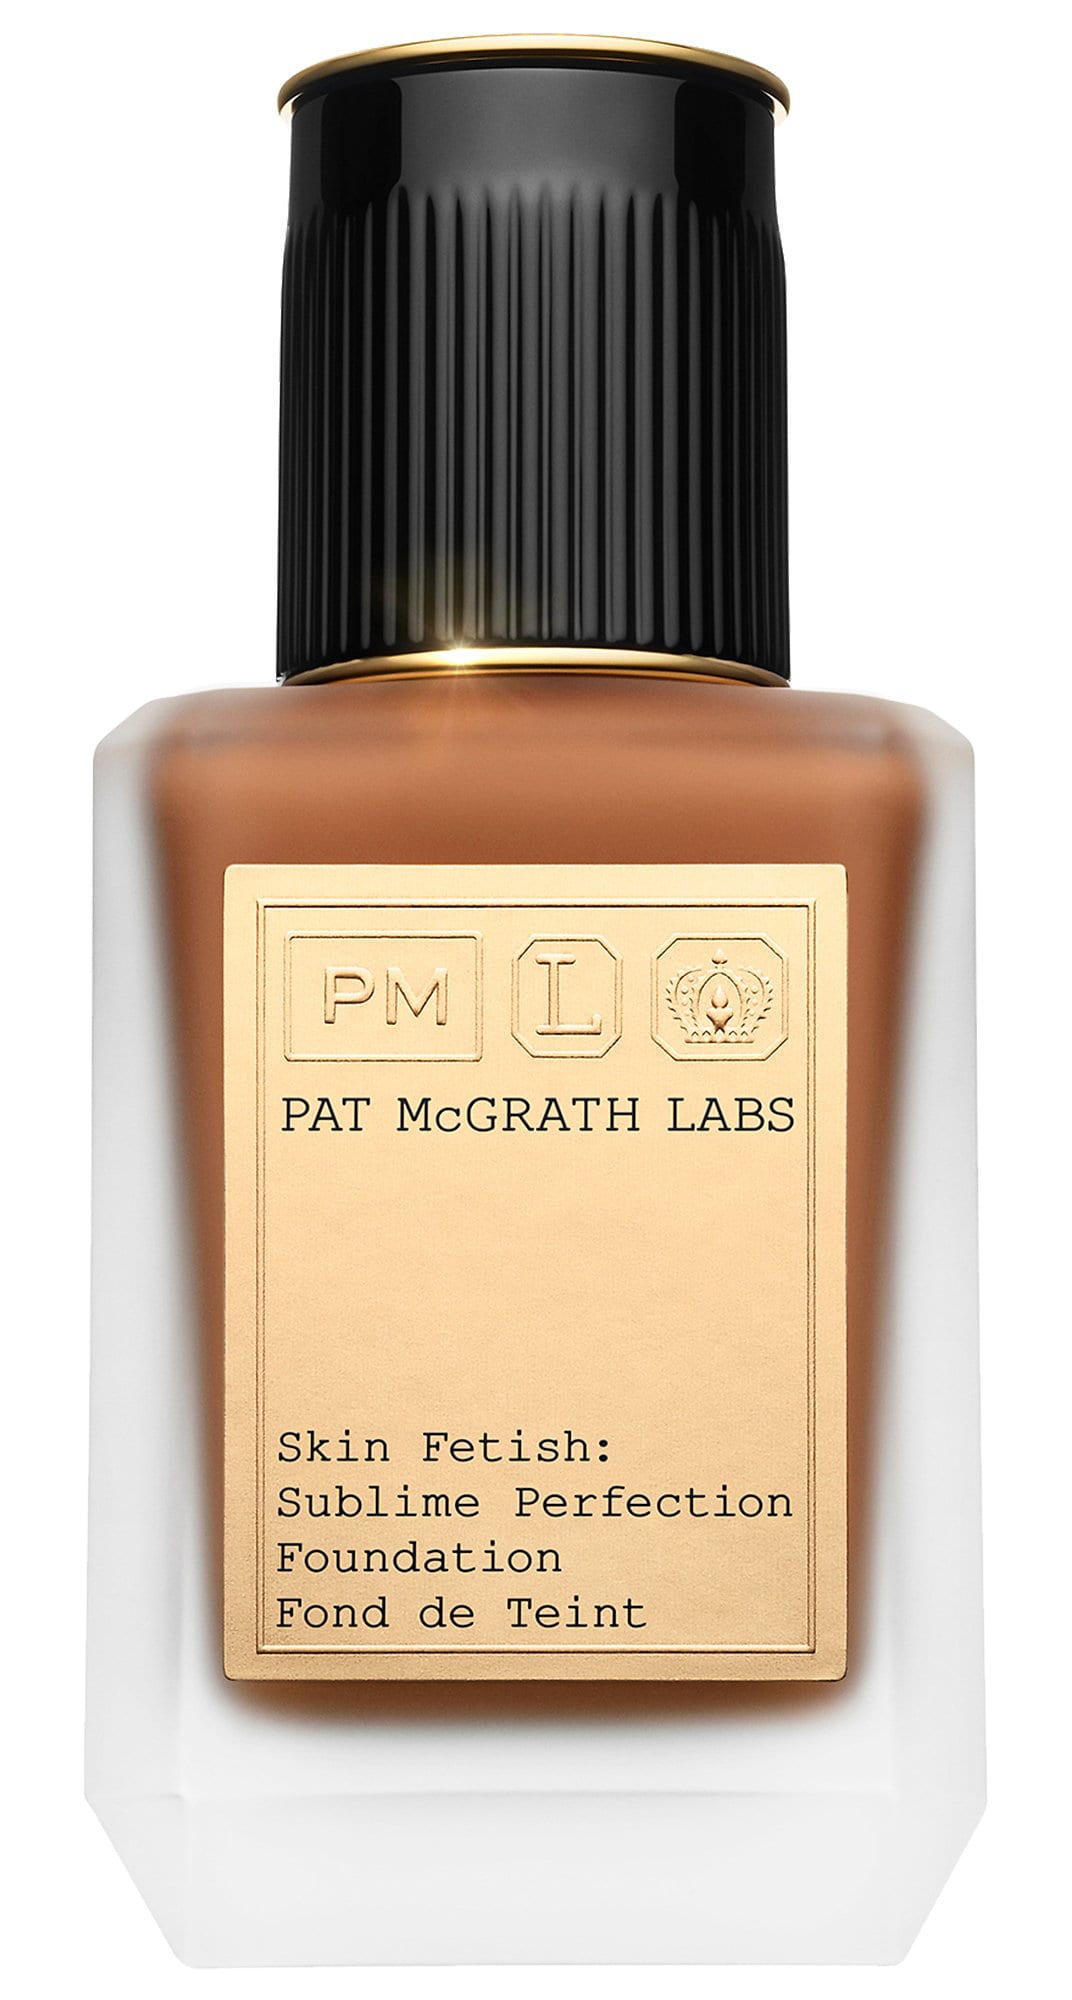 Pat McGrath Labs Skin Fetish: Sublime Perfection Foundation